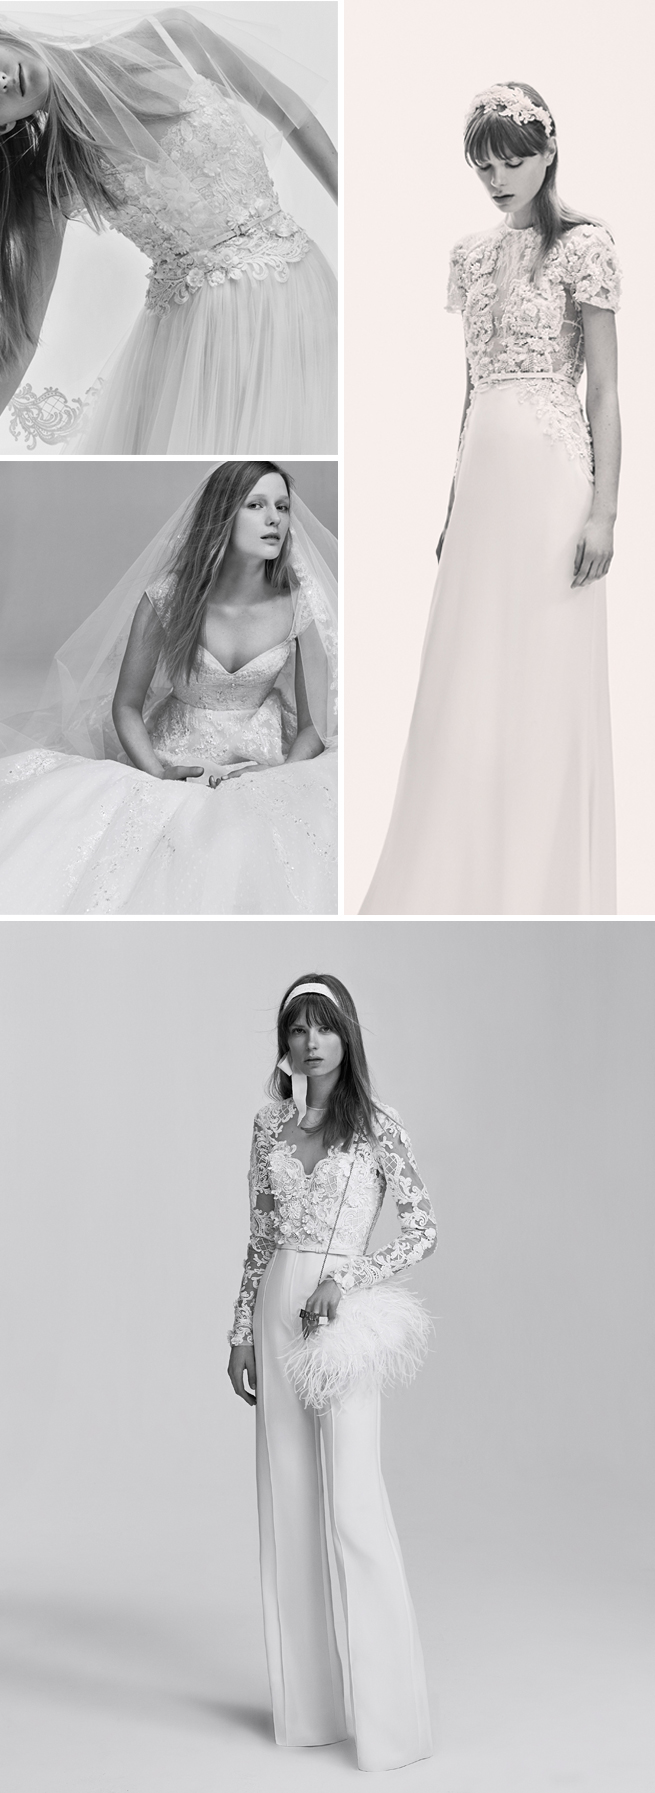 Elie Saab, Elie Saab Bridal, Bridal Gowns, Perfect wedding Blog, Perfect Wedding Magazine, Bridal Fashion, Oui, Haute Couture